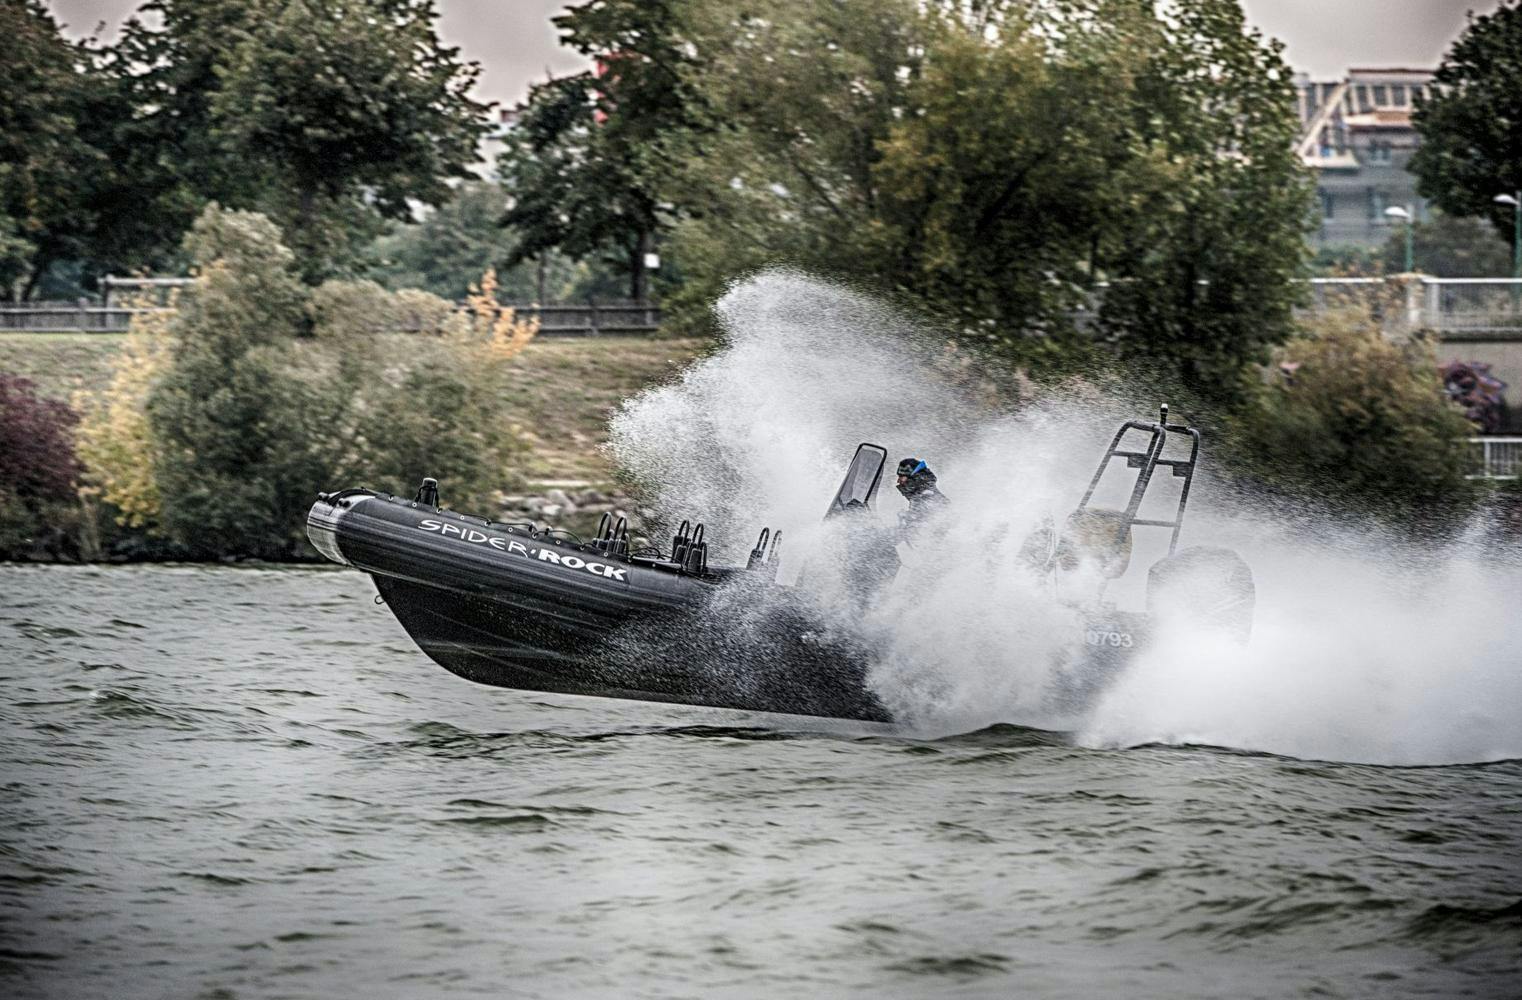 Military RIB | Speedboot fahren | 400PS | 30-40min